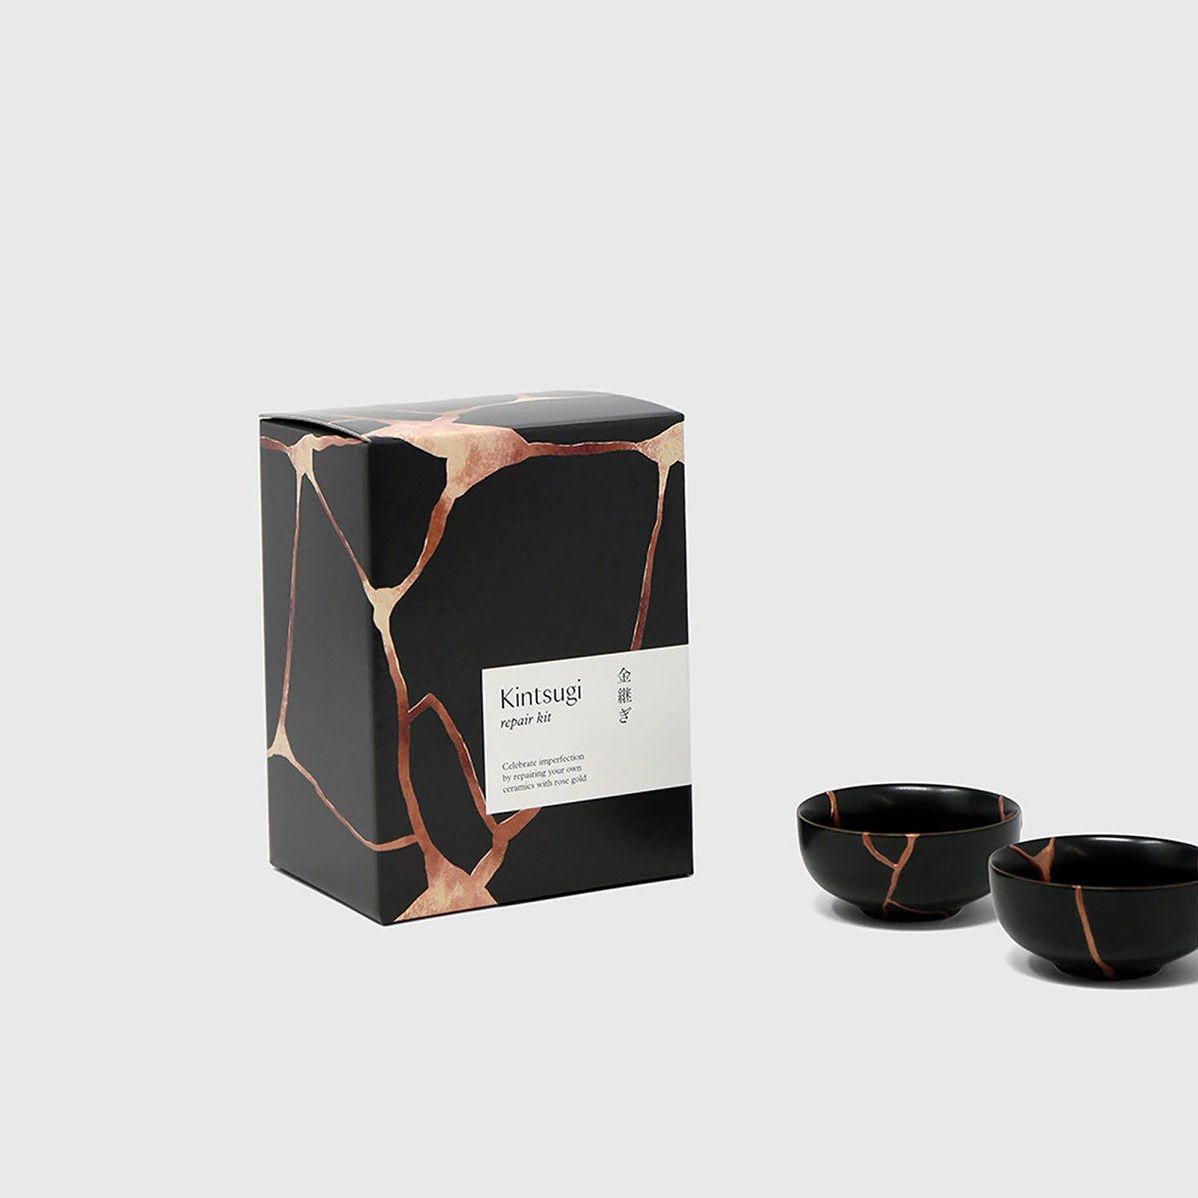 Traditional Japanese Ceramic Repair Kit For Repairing Ceramic Bowls and Vases Pukkr Gold Glue Decorative Home Accessories Kintsugi Kit 